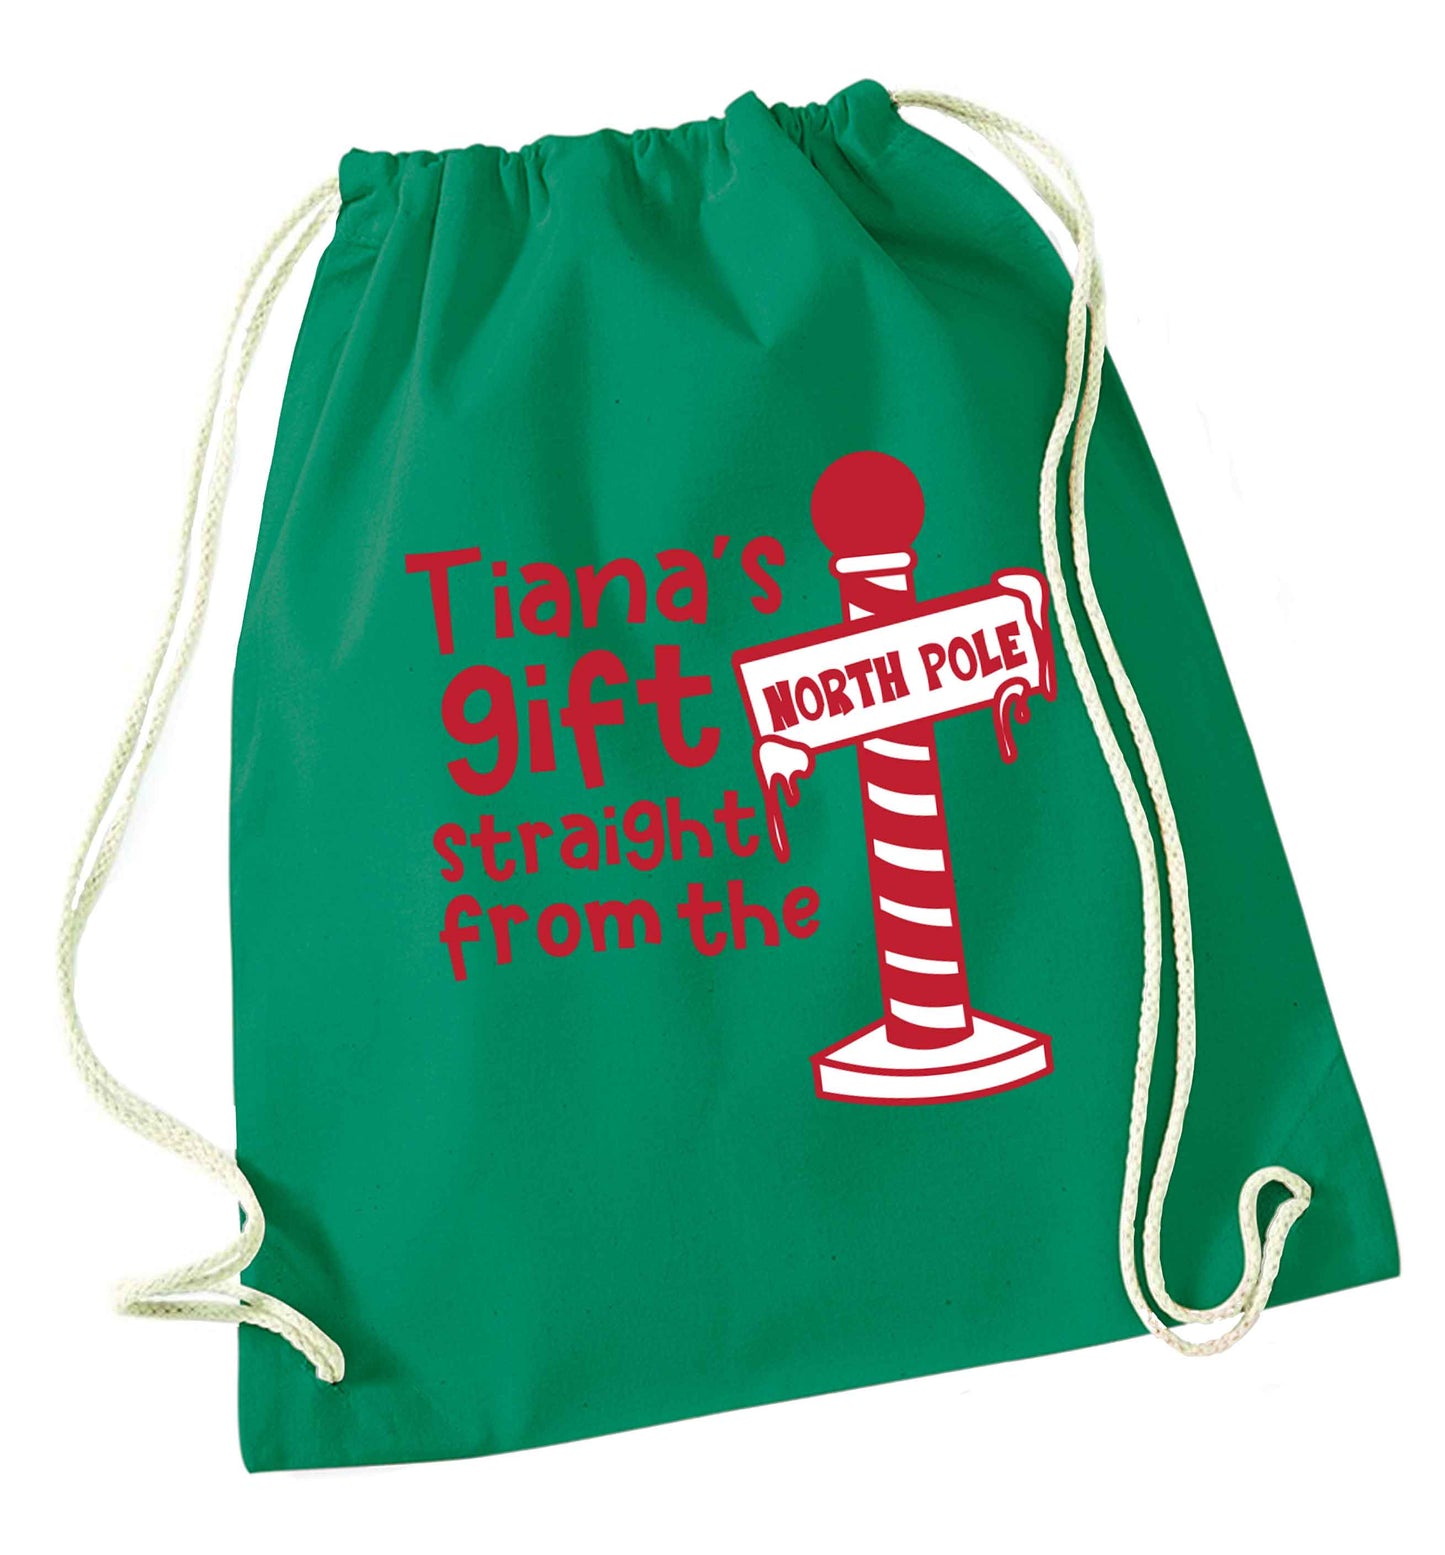 Merry Christmas green drawstring bag